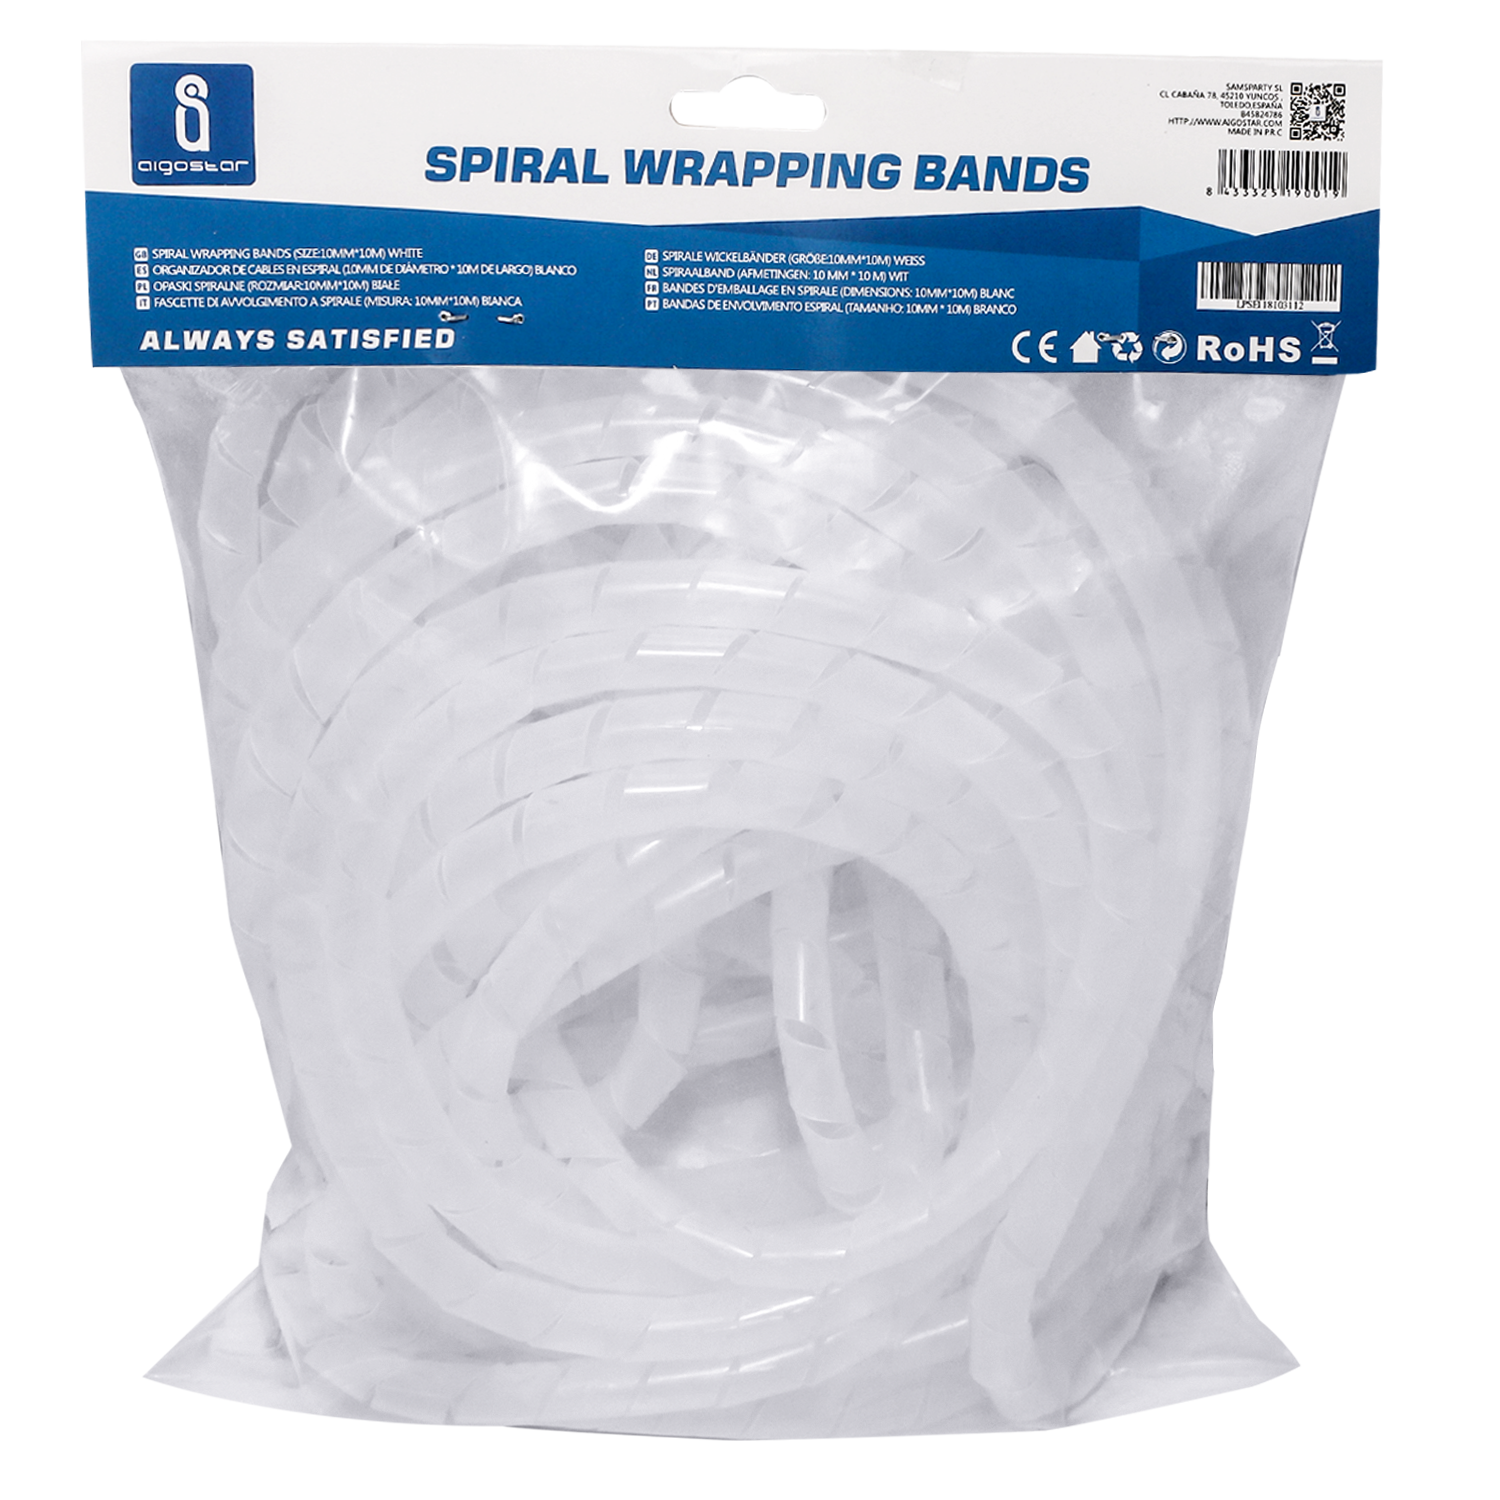 banda para enrollar cables en espiral 10 mm x 10 m, blanco